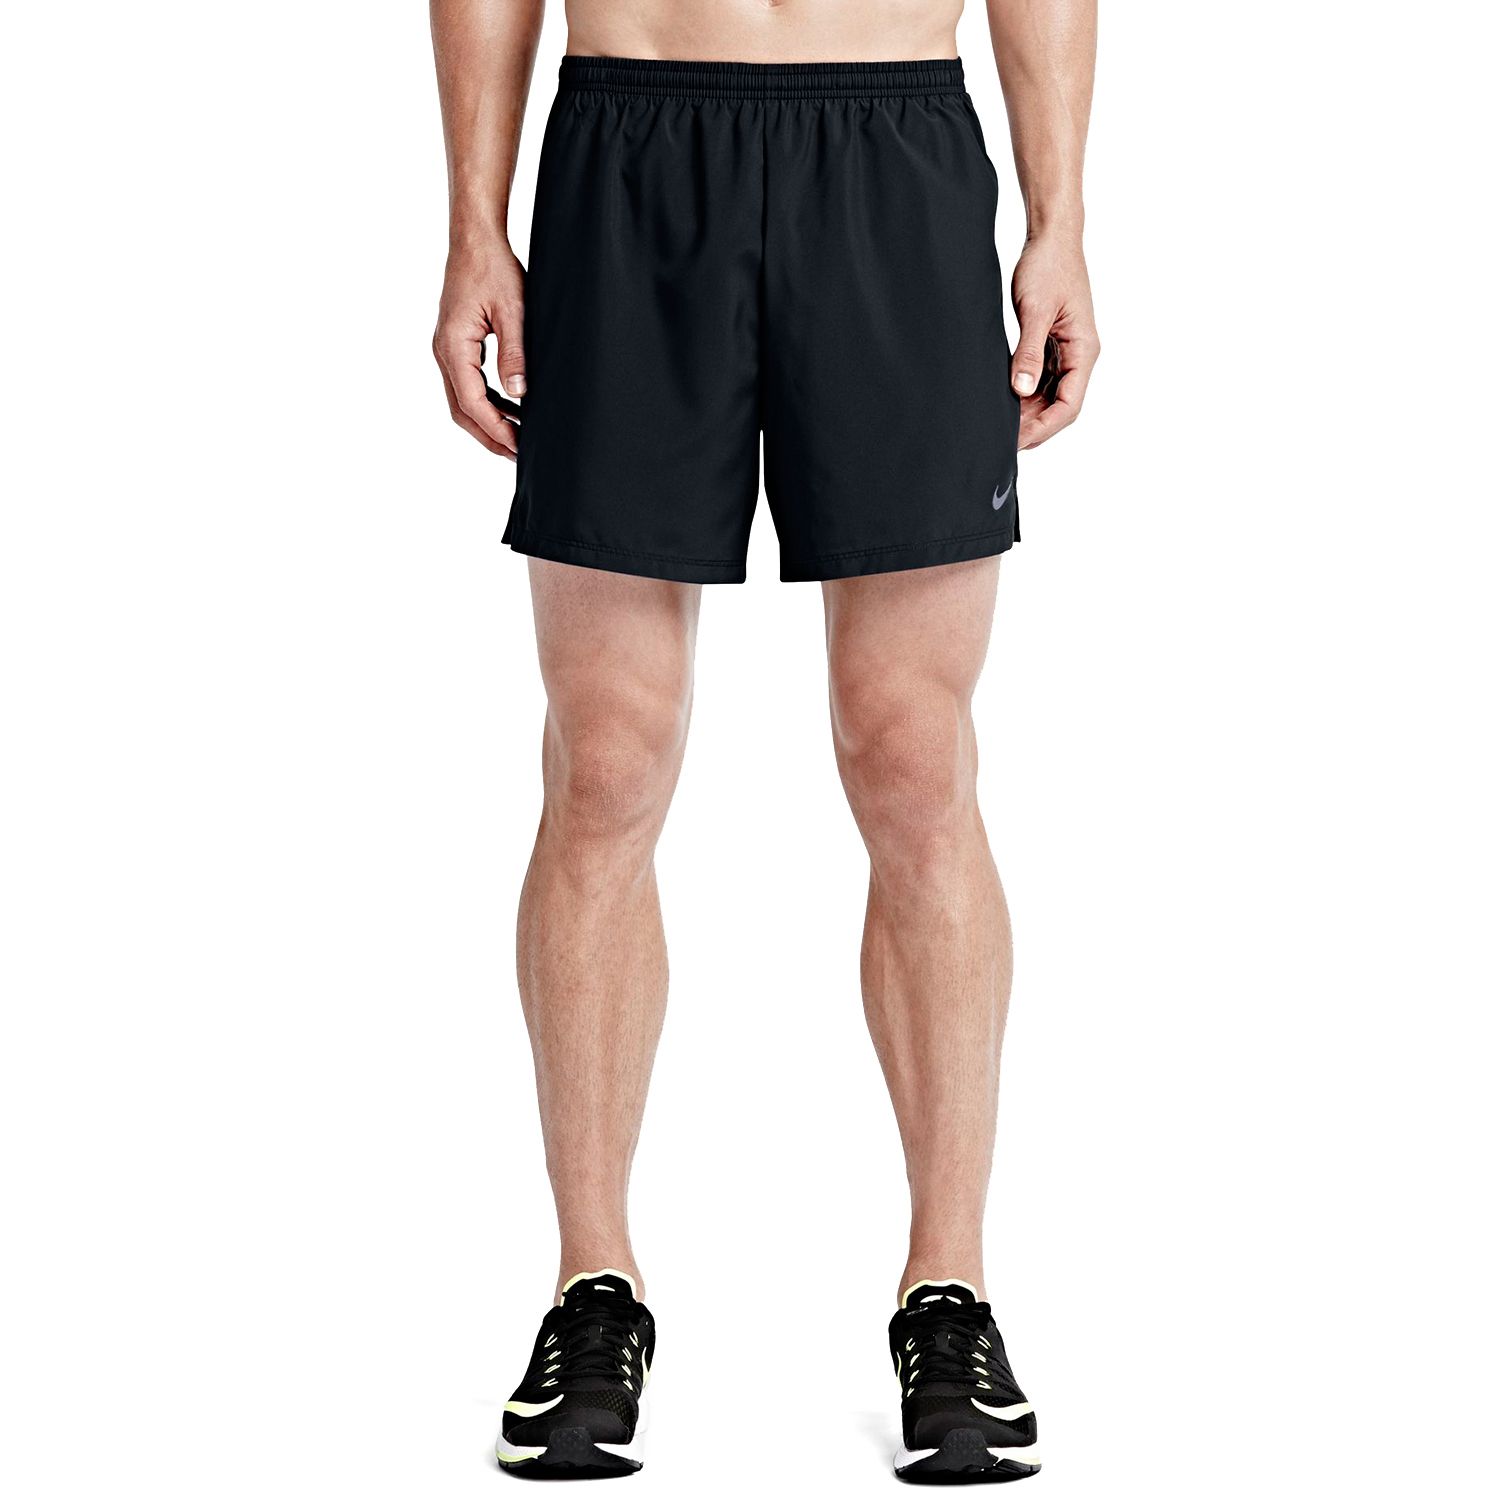 nike challenger 5 inch running shorts